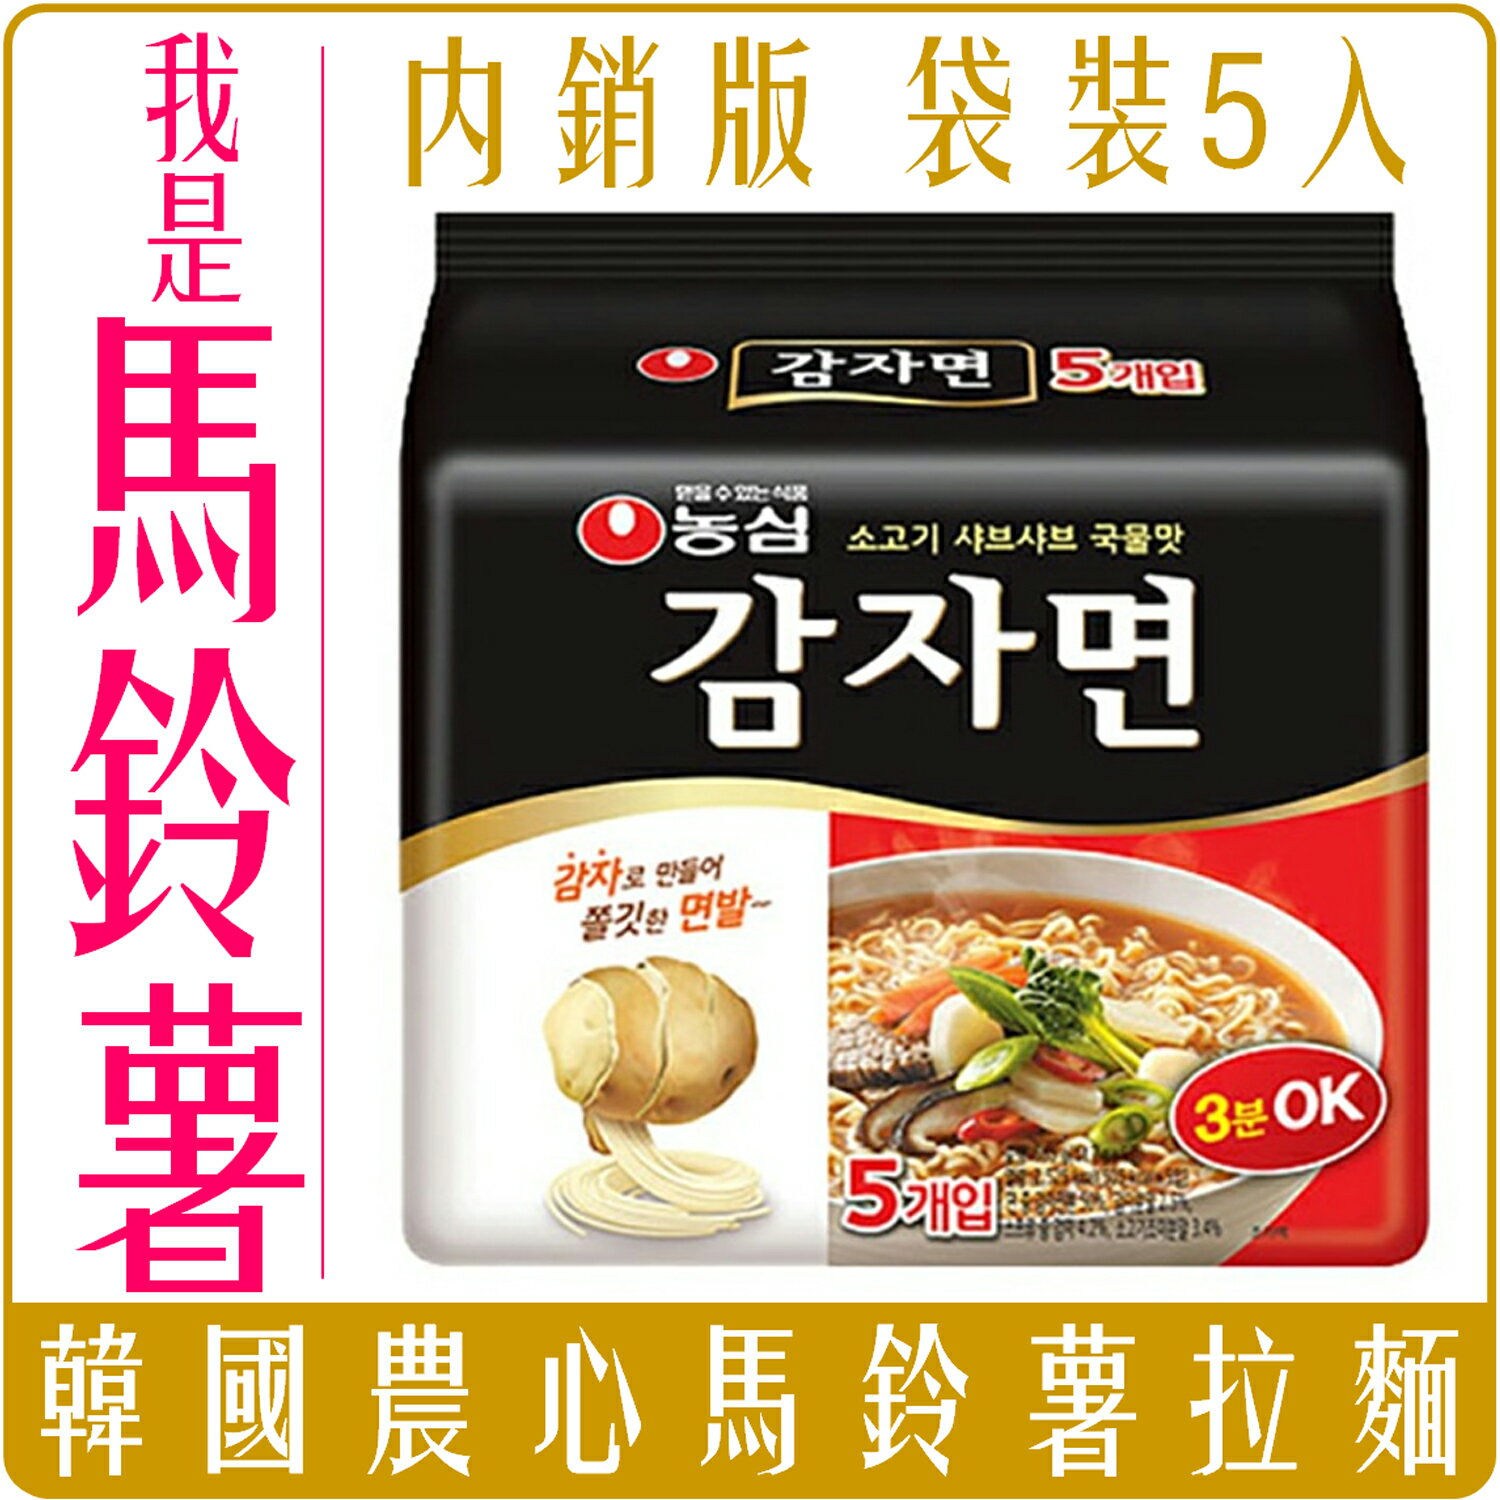 《 Chara 微百貨 》韓國 農心 馬鈴薯 麵 單入 露營 馬鈴薯麵 團購 批發 拉麵 泡麵